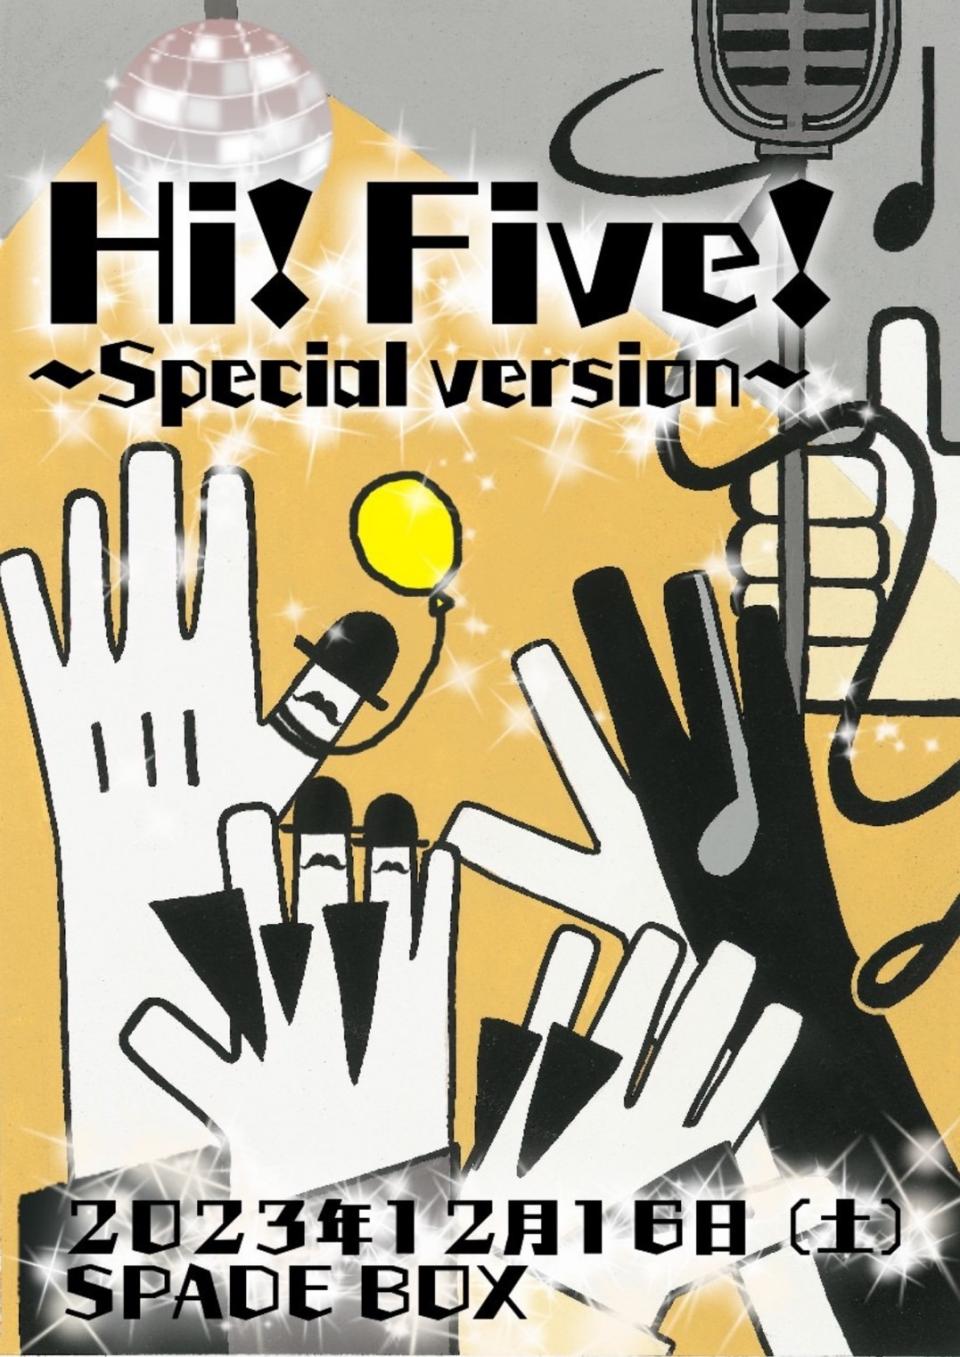 「Hi! Five! -special ver.-」の上演のお知らせ